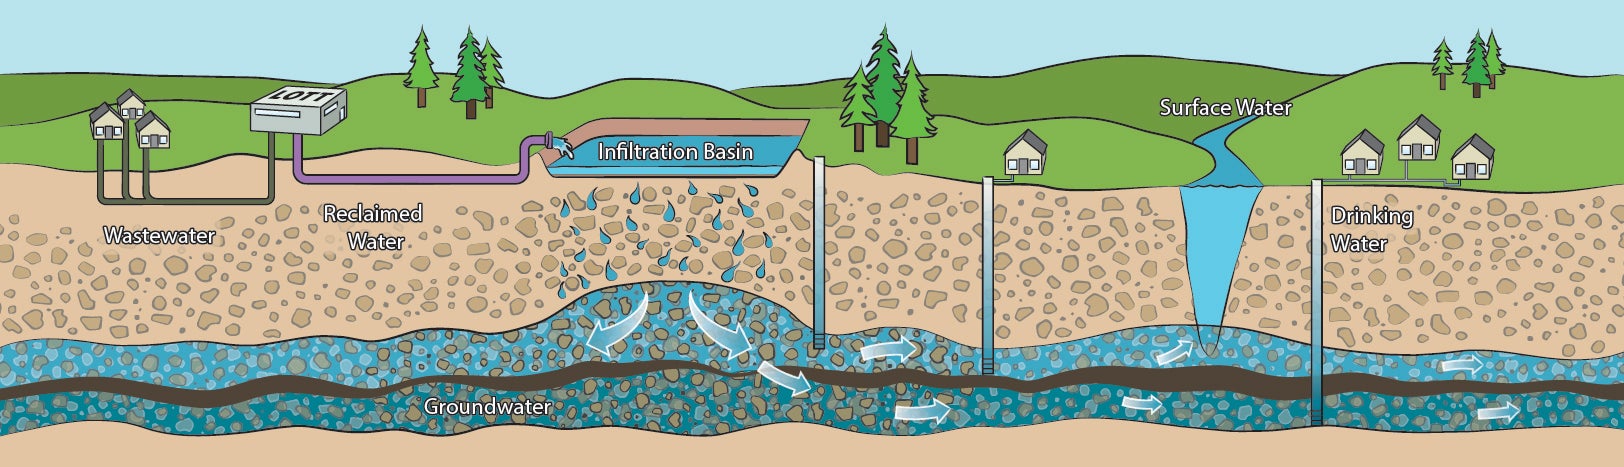 LOTT Clean Water Alliance Reclaimed Water Infiltration Study